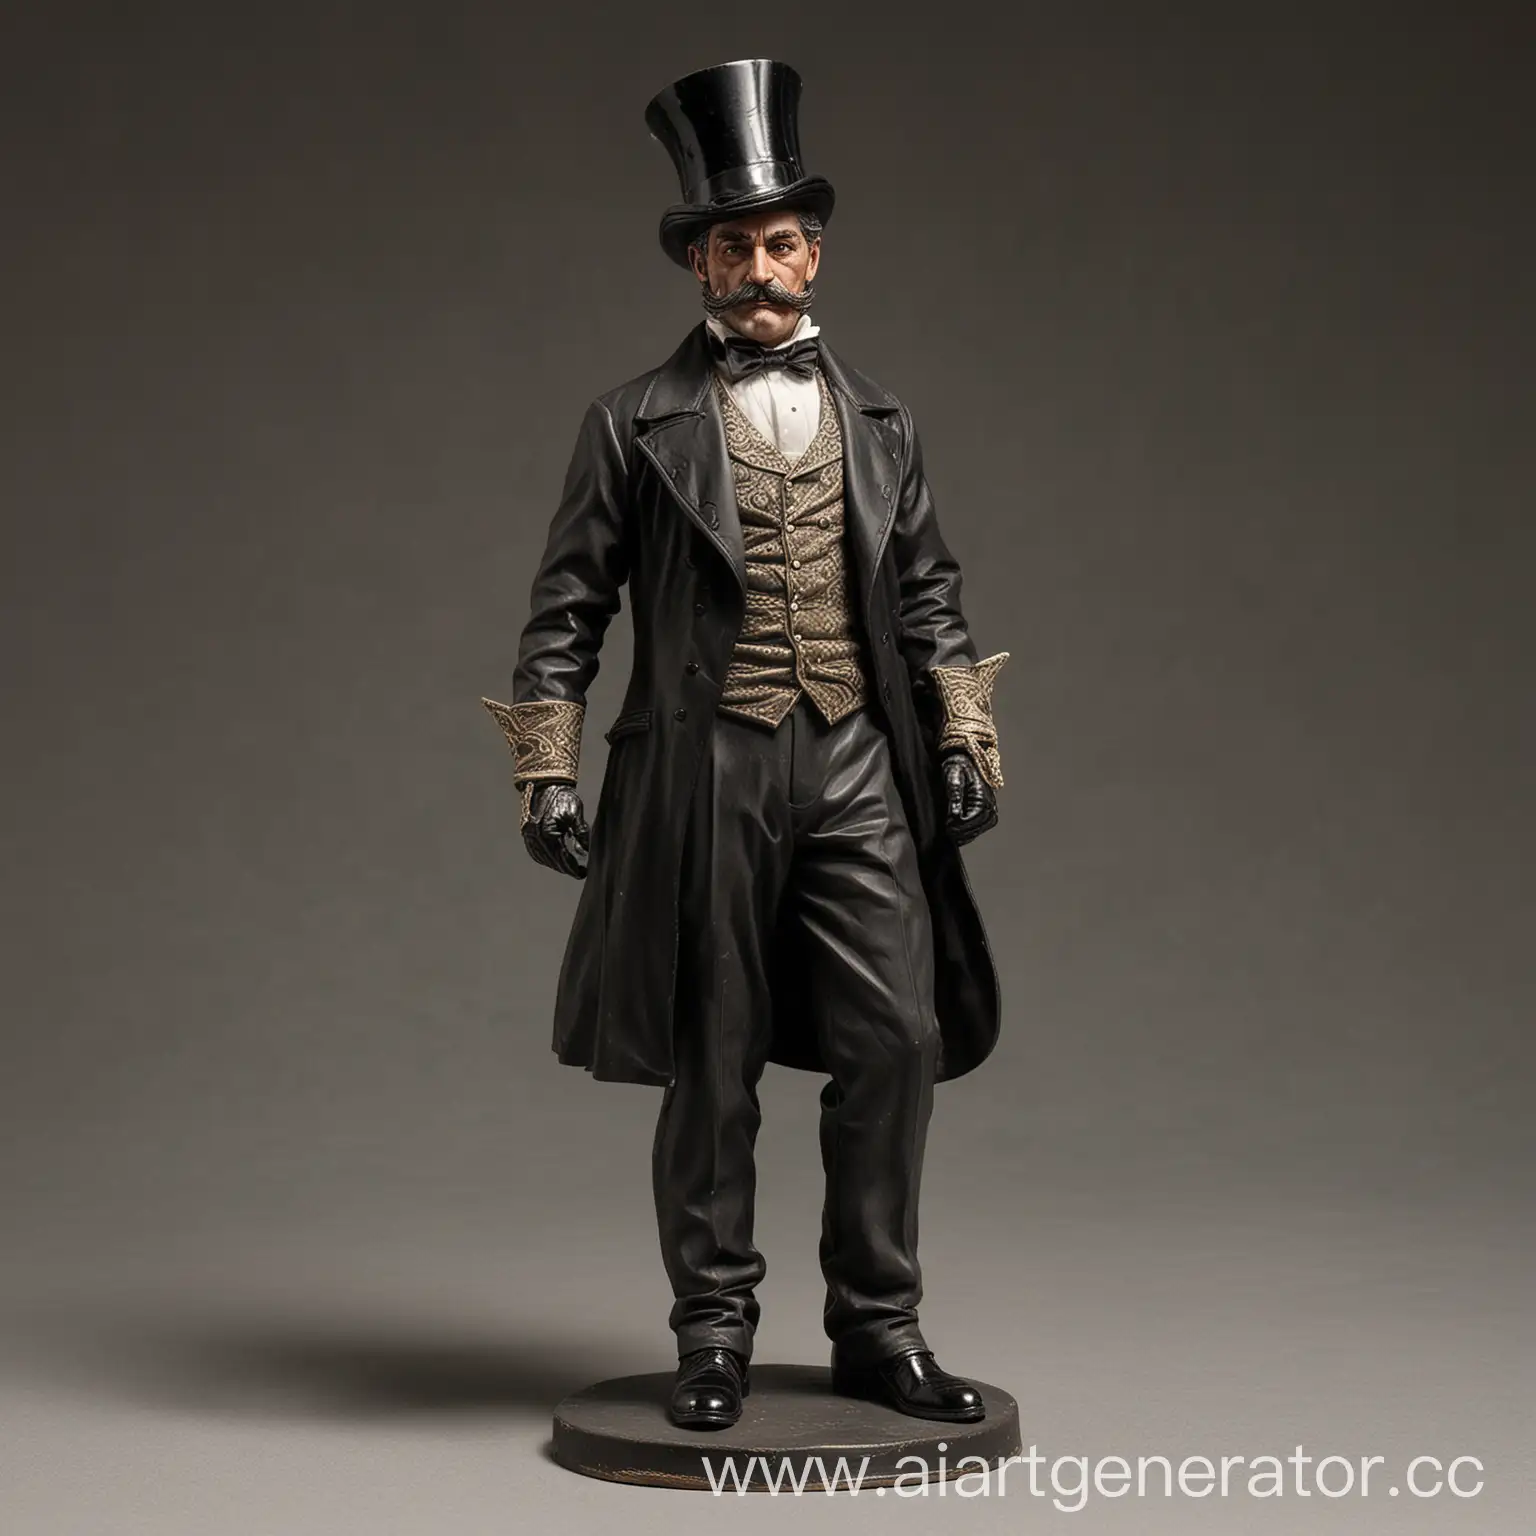 Mysterious-Gentleman-in-Victorian-London-with-Crownadorned-Top-Hat